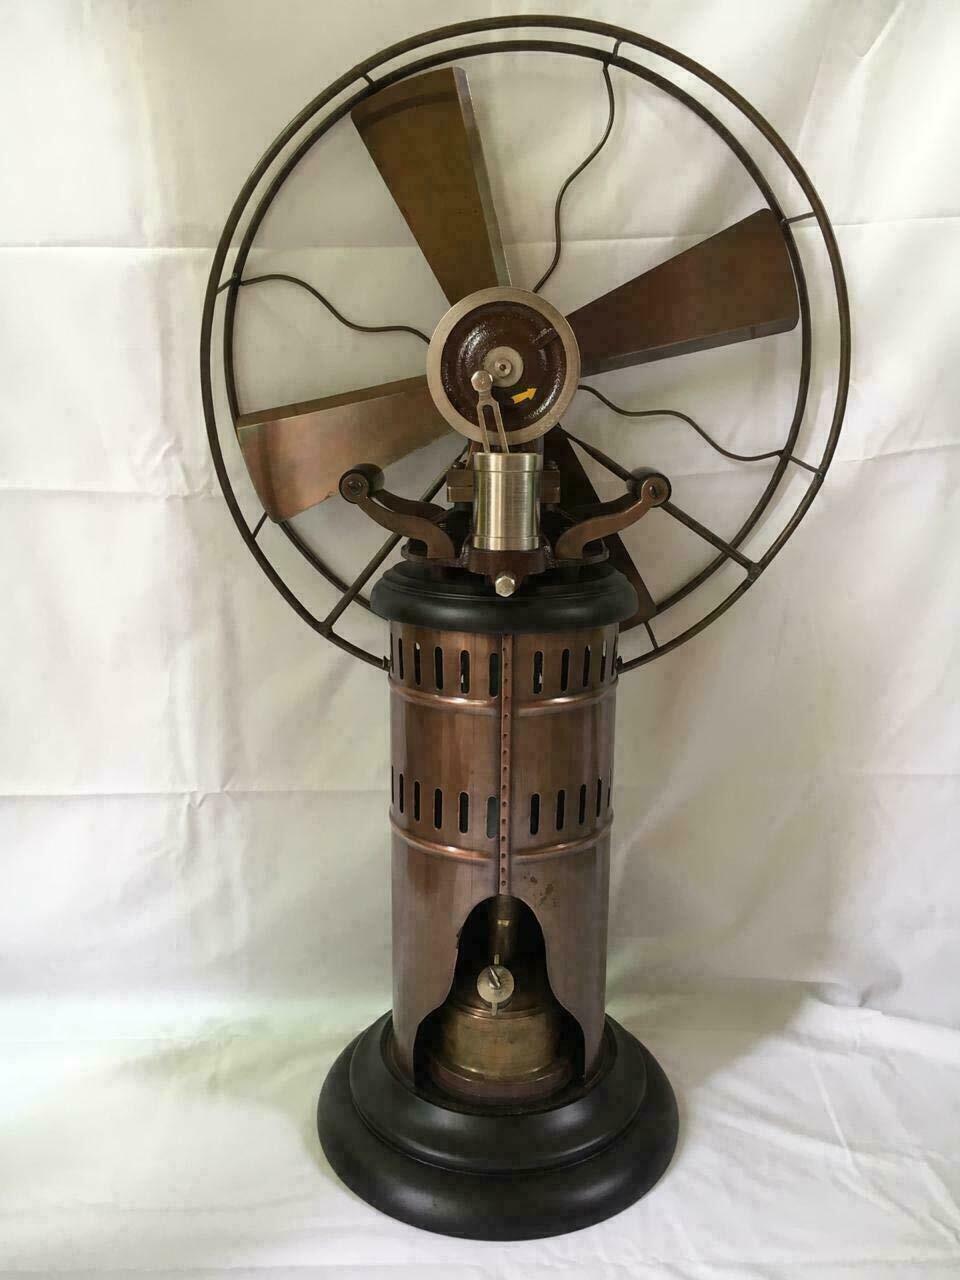 Antique Antique Stirling Engine Kerosene Fan Collectibles Museum Vintage Gift.